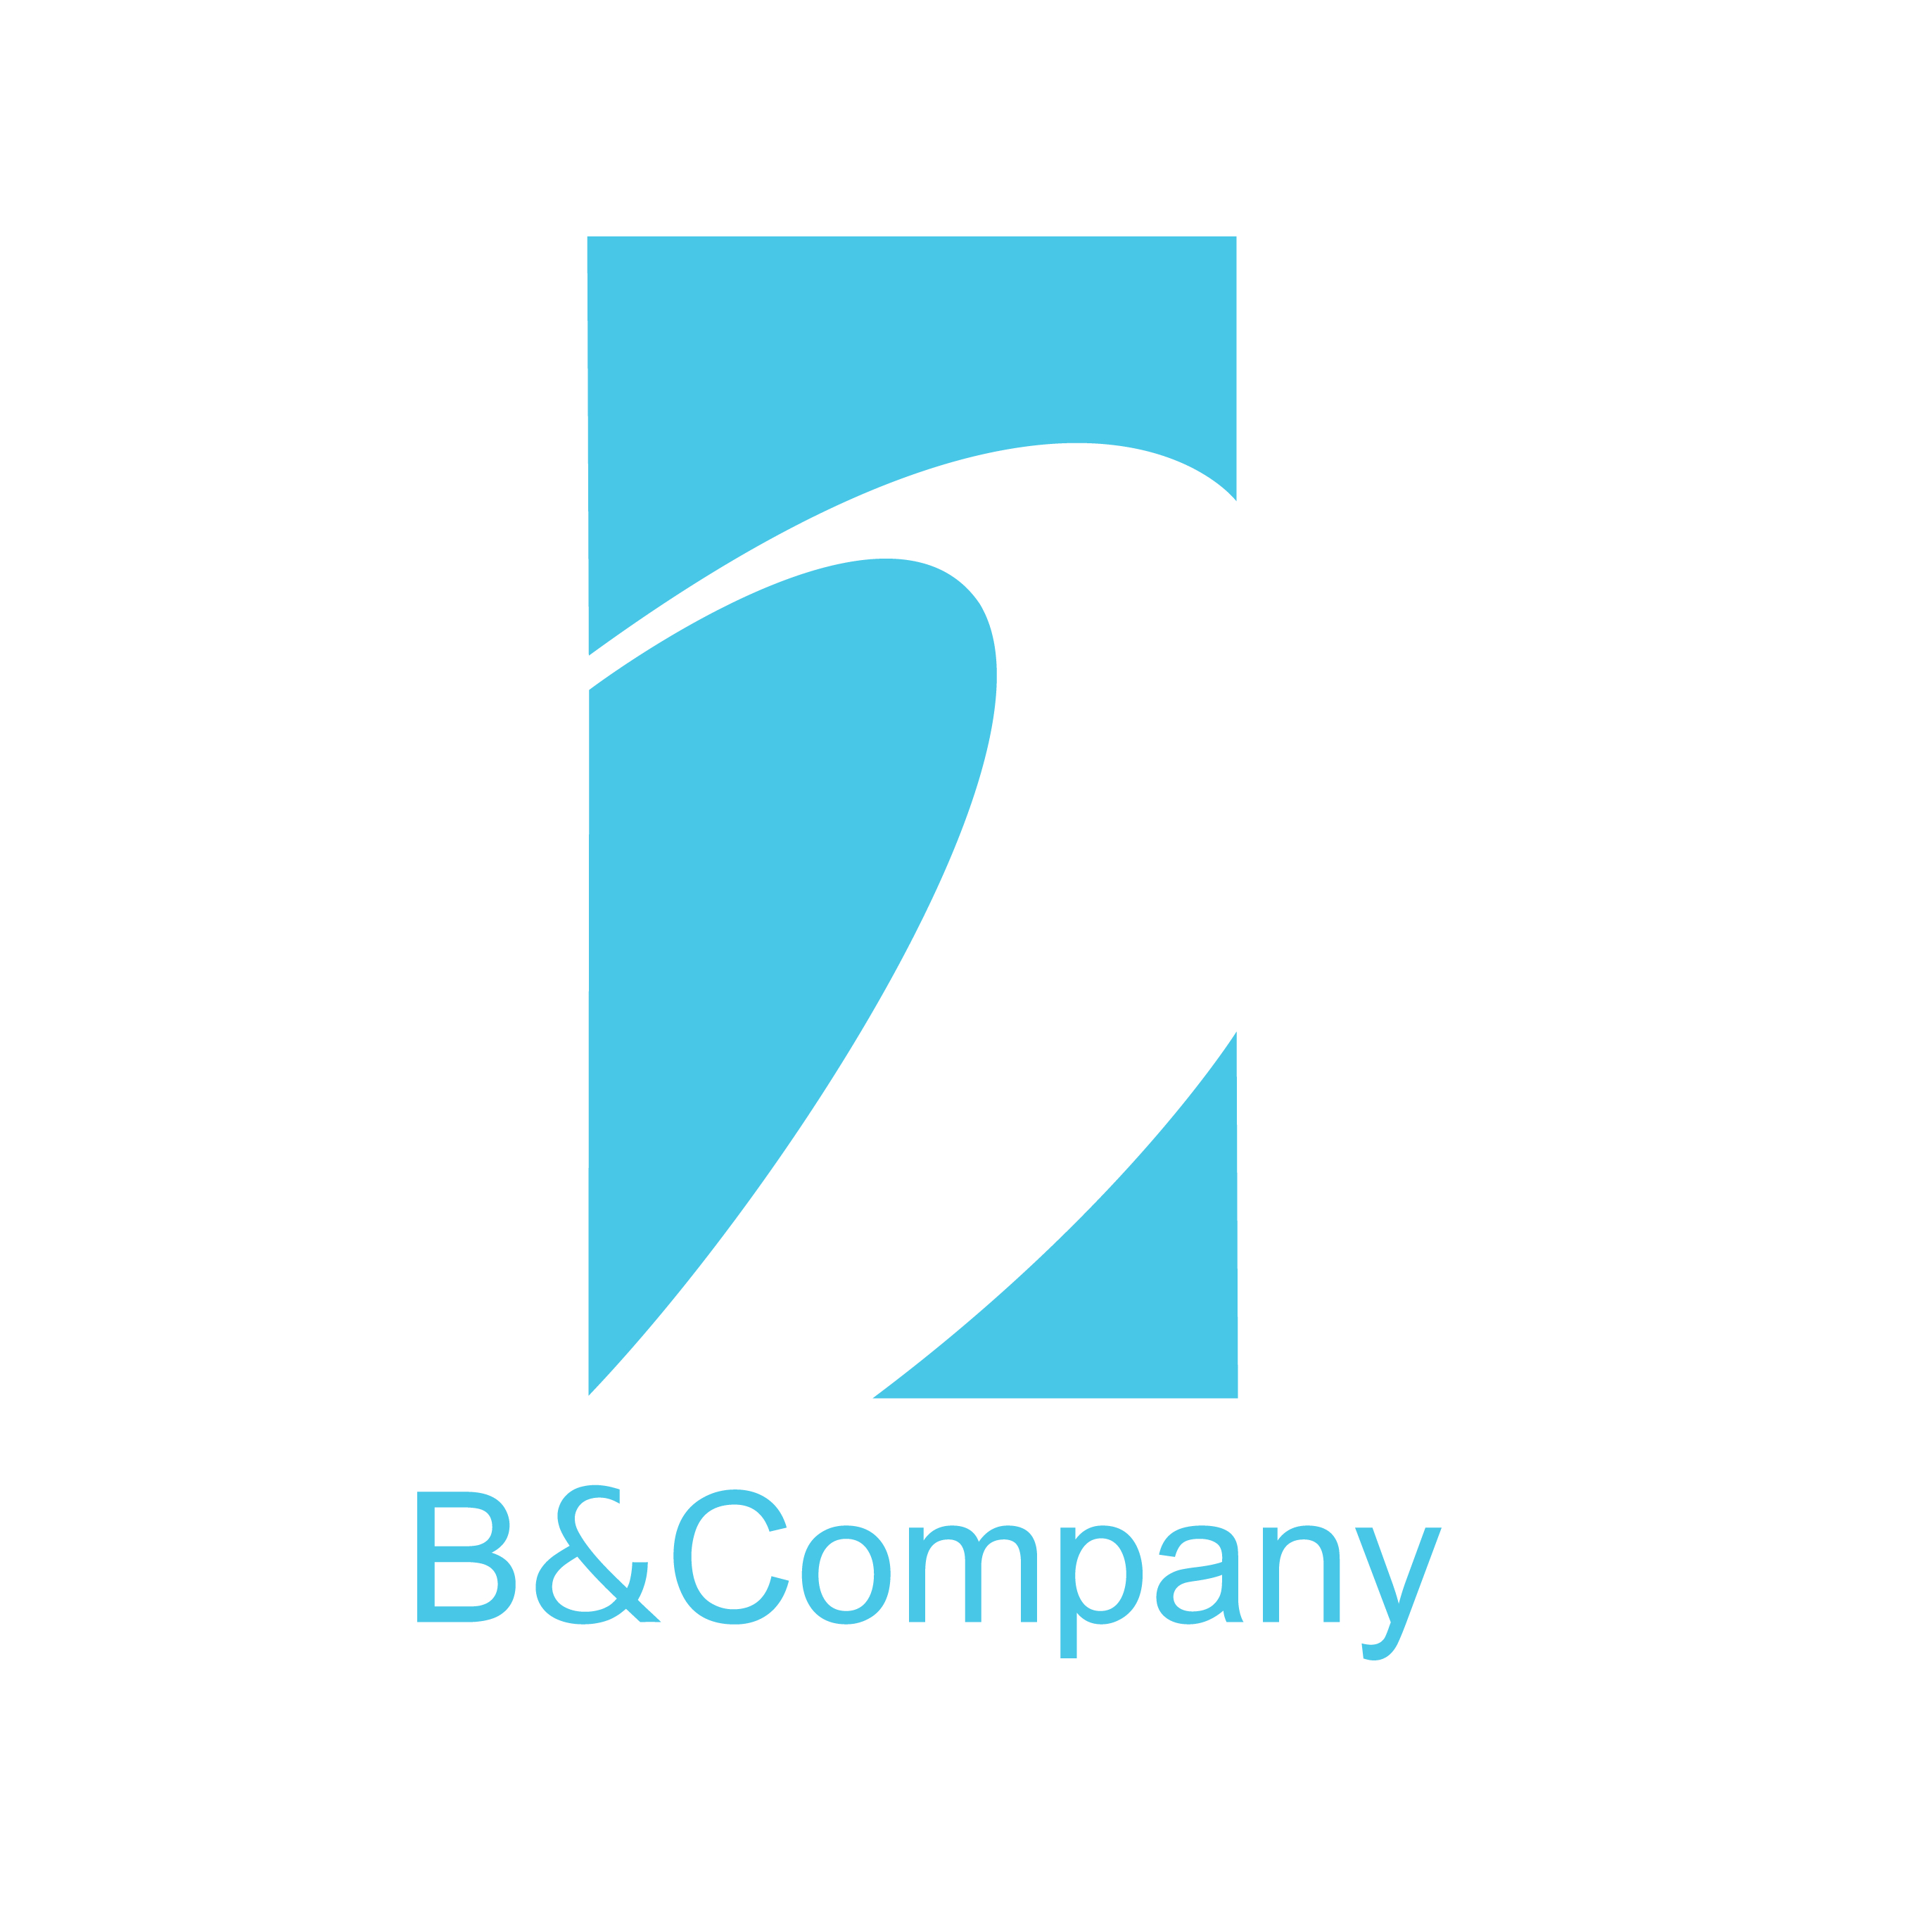 B&Company Vietnam logo